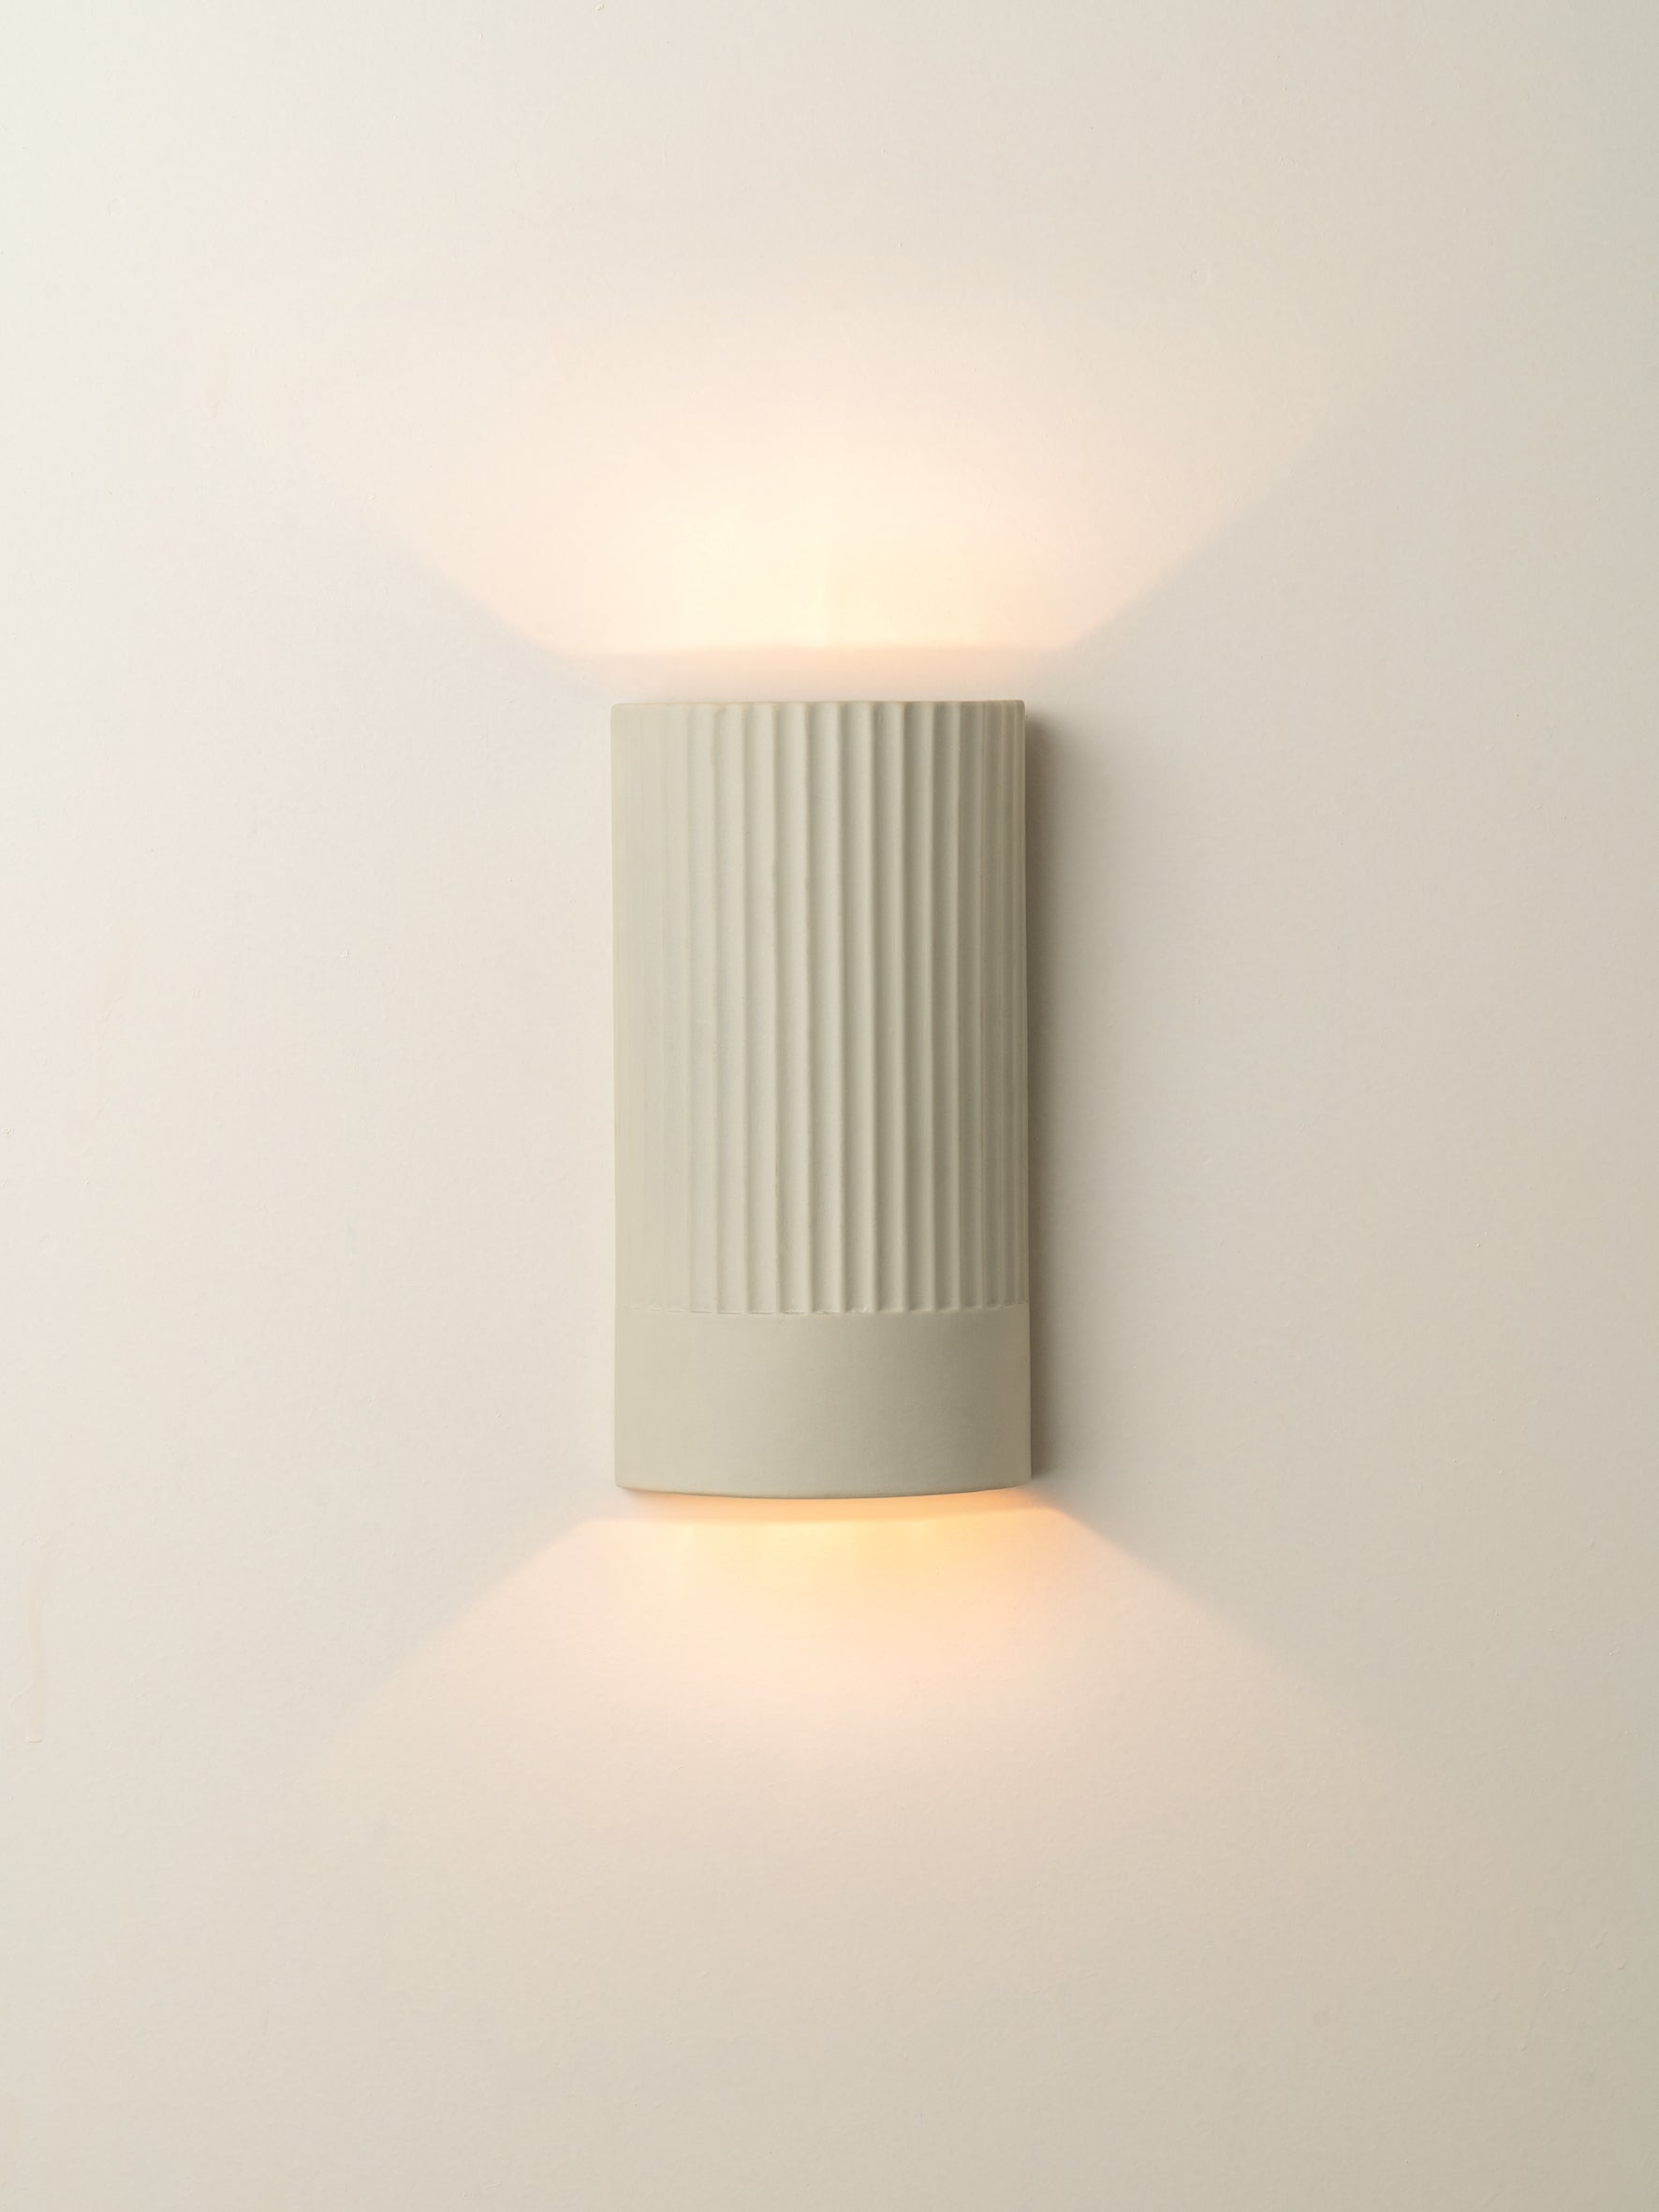 Enza - warm white  ribbed concrete wall light | Wall Light | Lights & Lamps | UK | Modern Affordable Designer Lighting